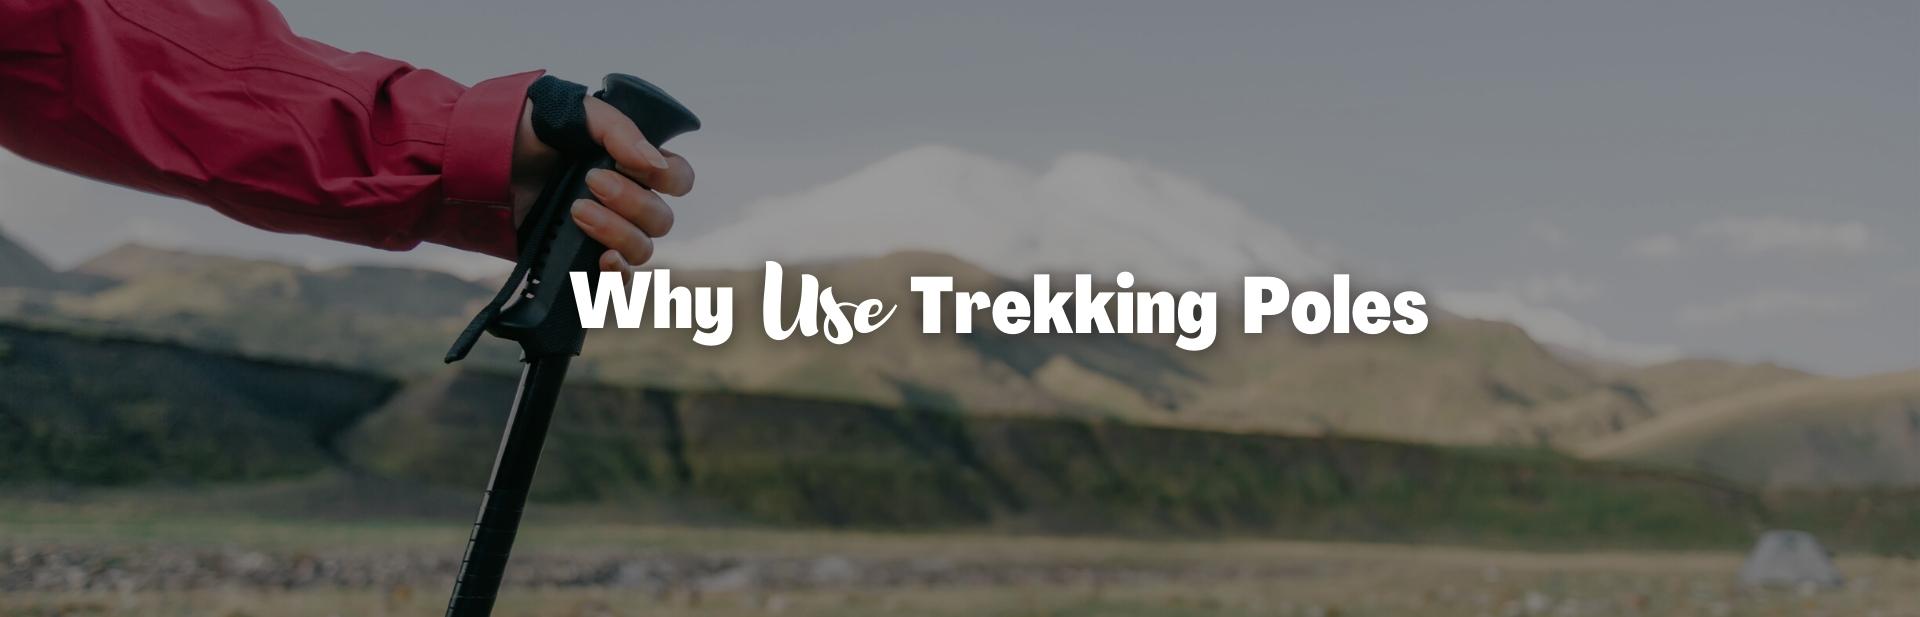 Why Use Trekking Poles?: Advantages, Disadvantages & Pro Tips!